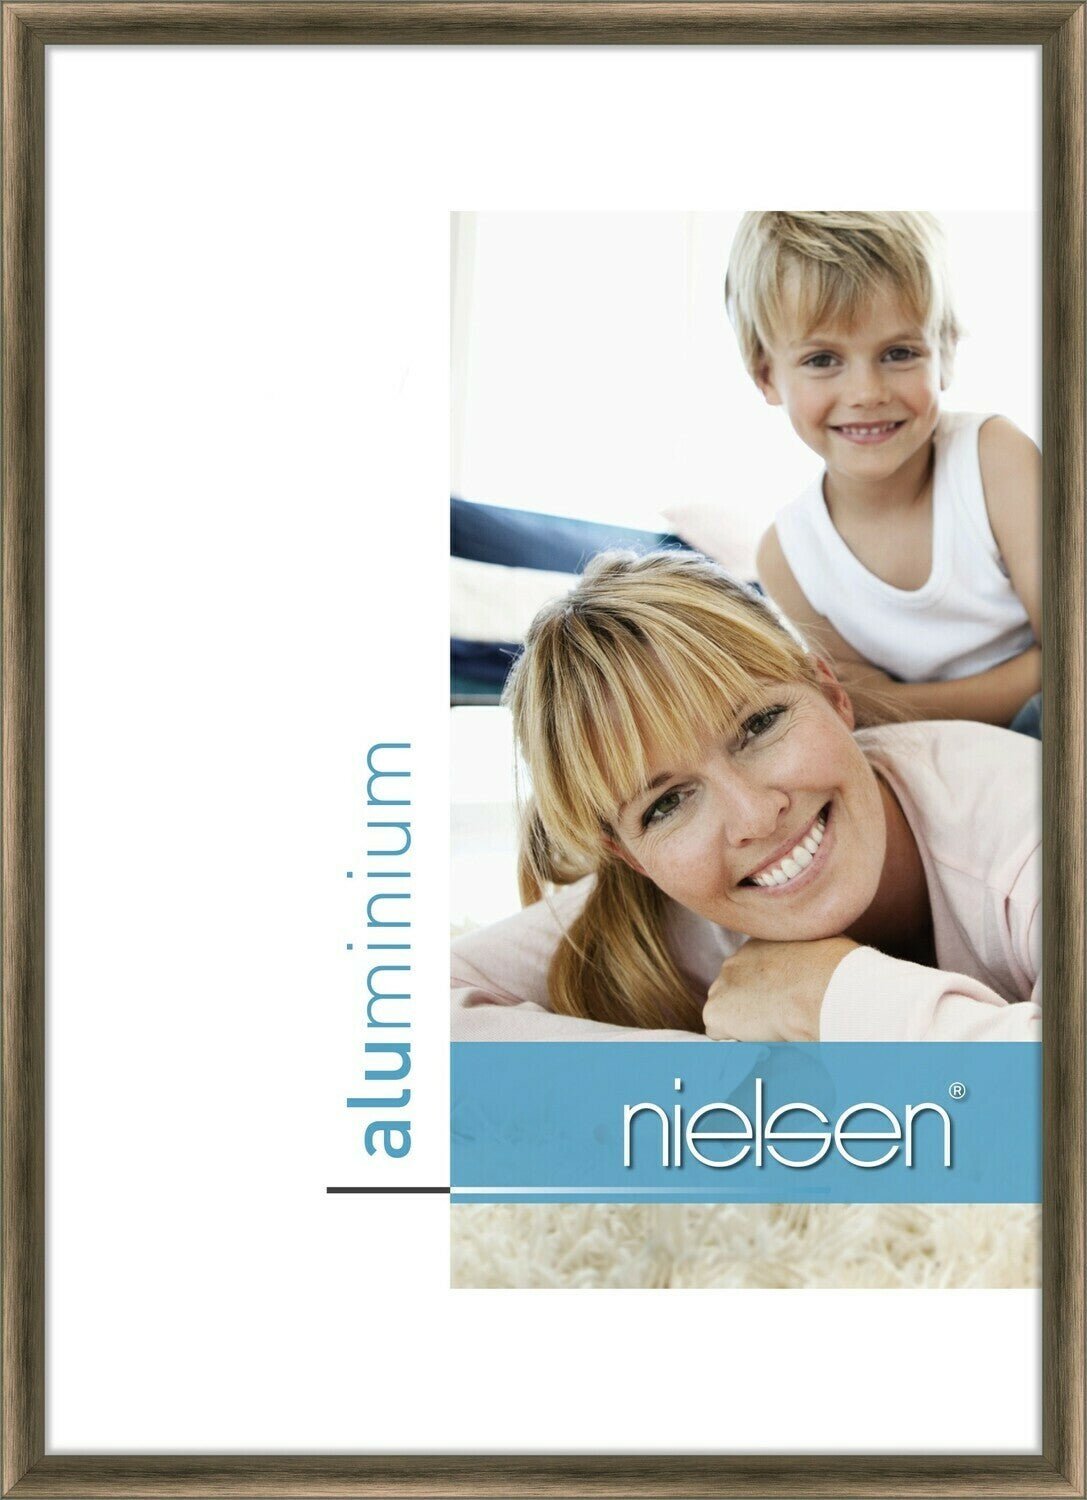 30 x 40cm | Classic Nielsen Frames